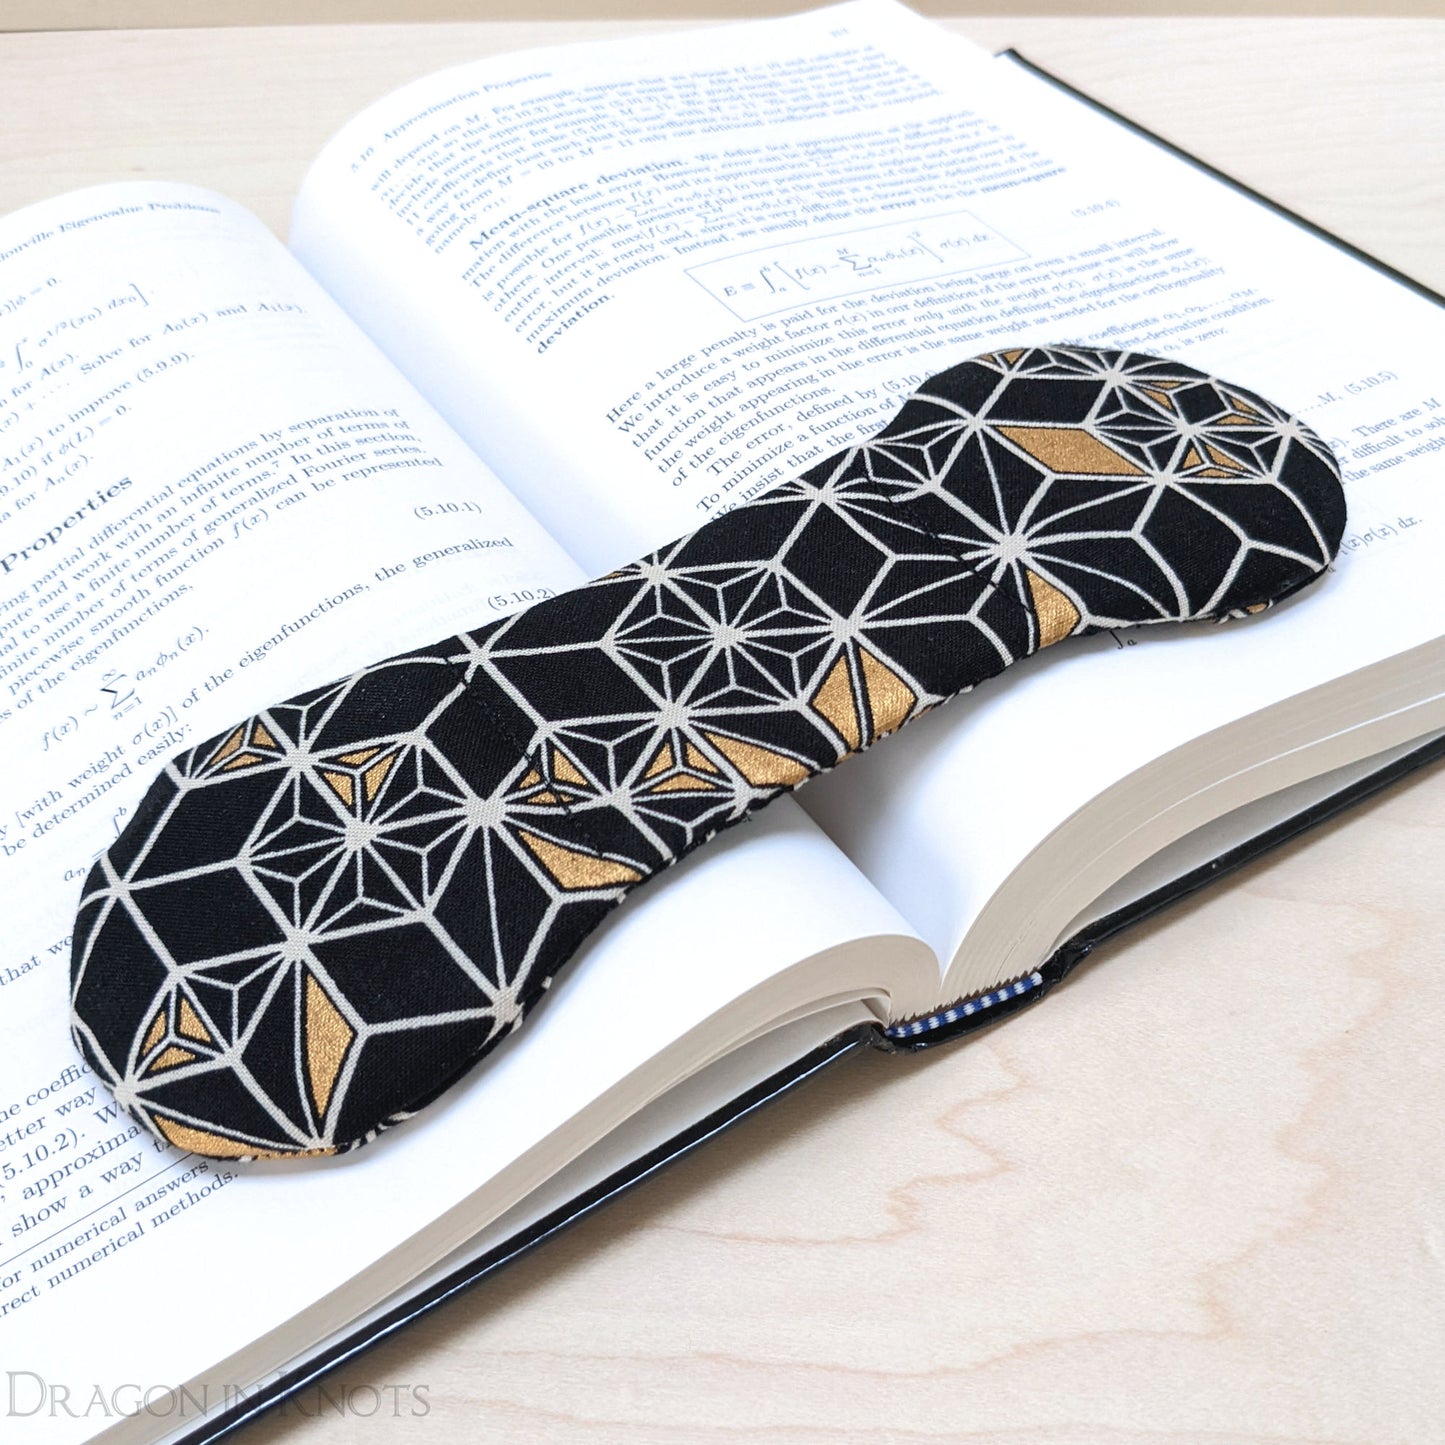 Asanoha Book Weight - Dragon in Knots handmade